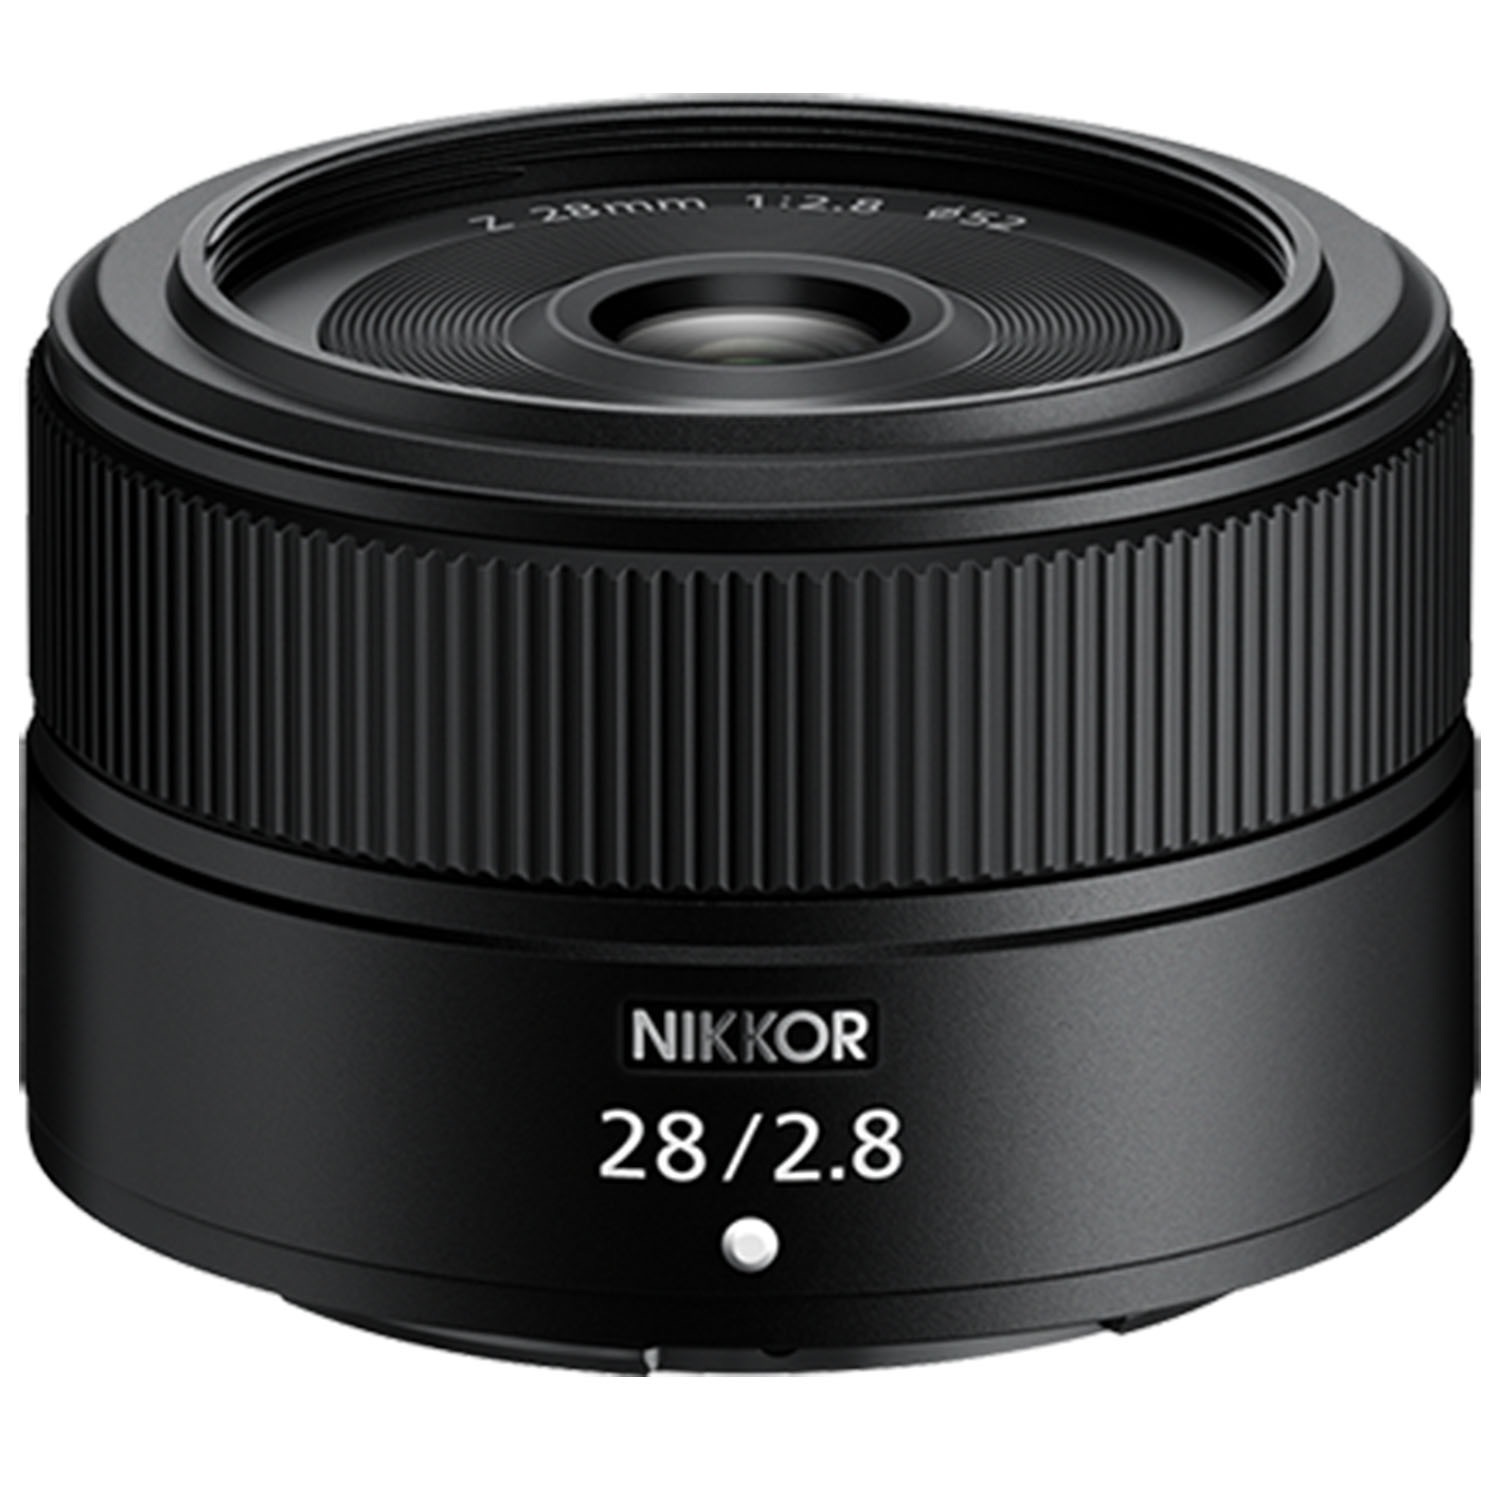 Nikon Z 28mm f2.8 Main Image